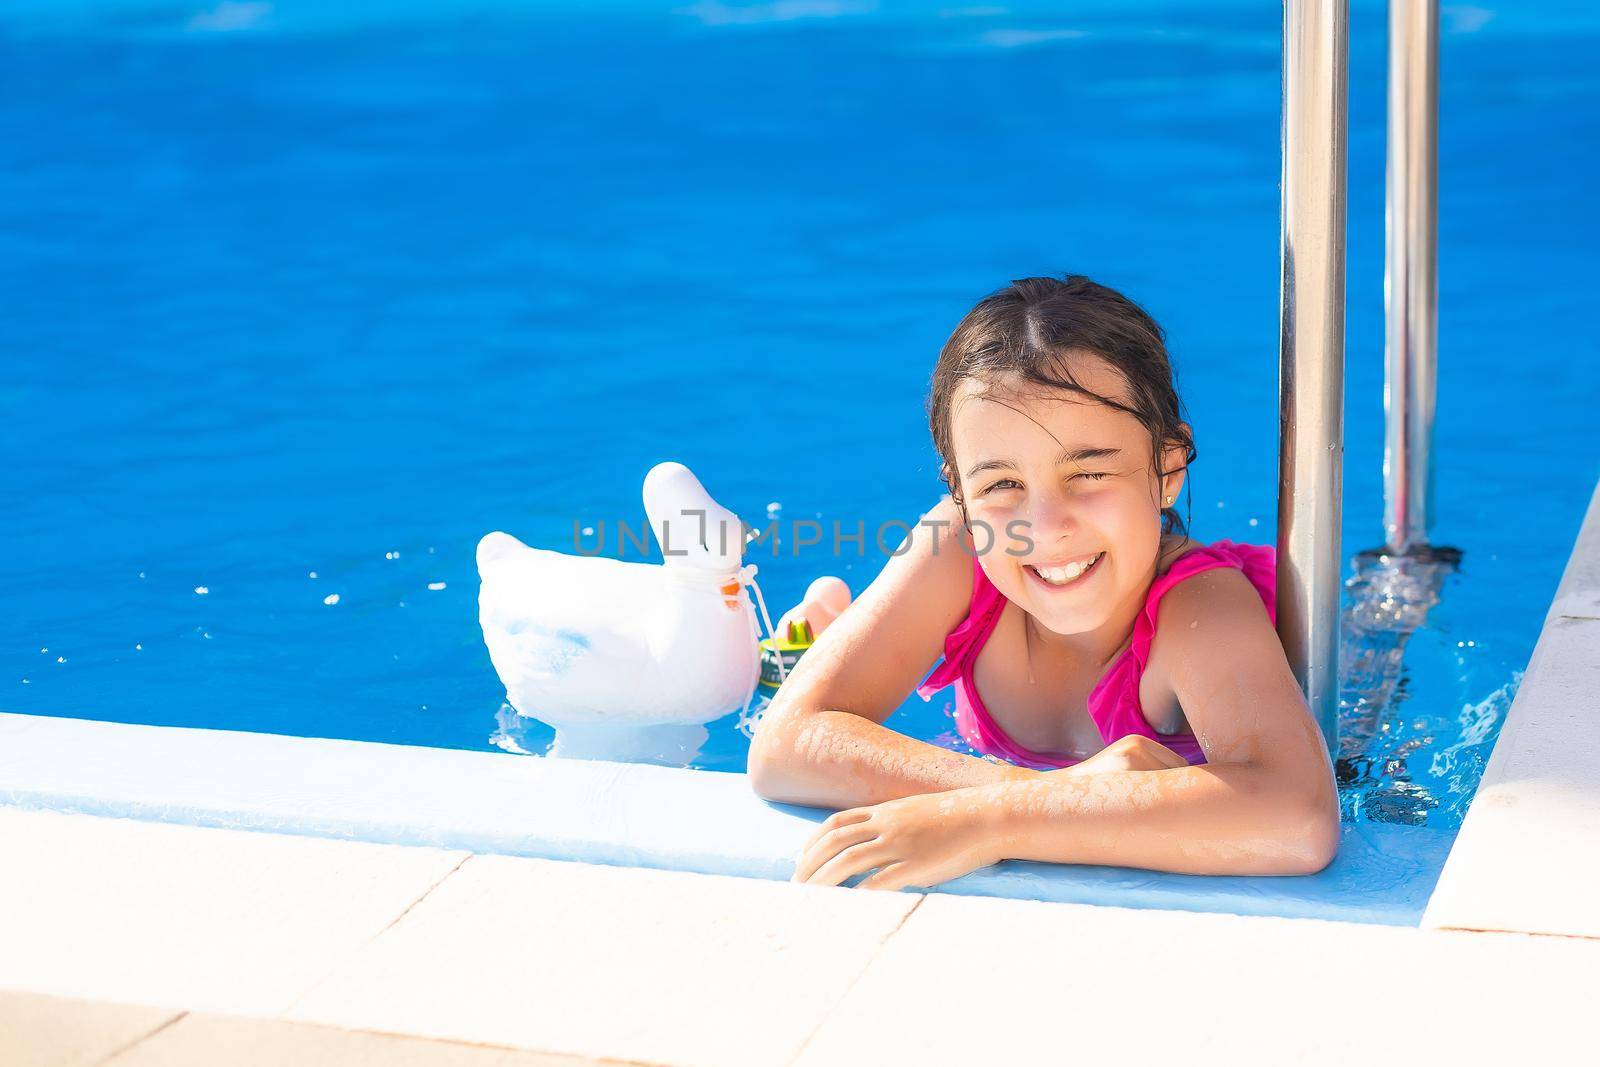 happy little girl having fun in the pool in swimming suit